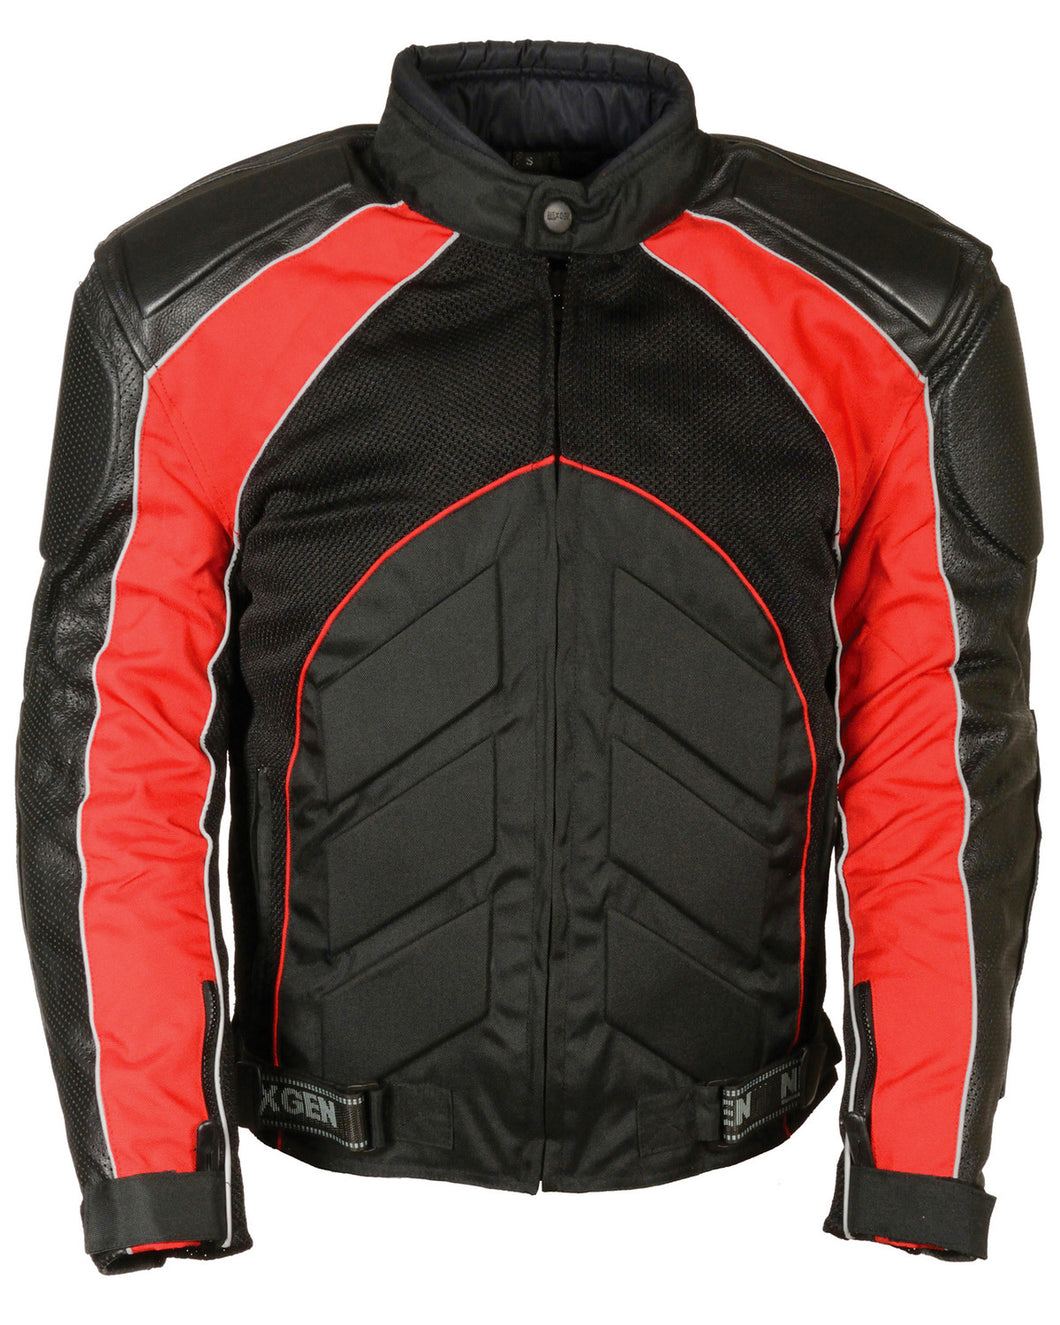 Men's Combo Leather Textile Mesh Racer Jacket